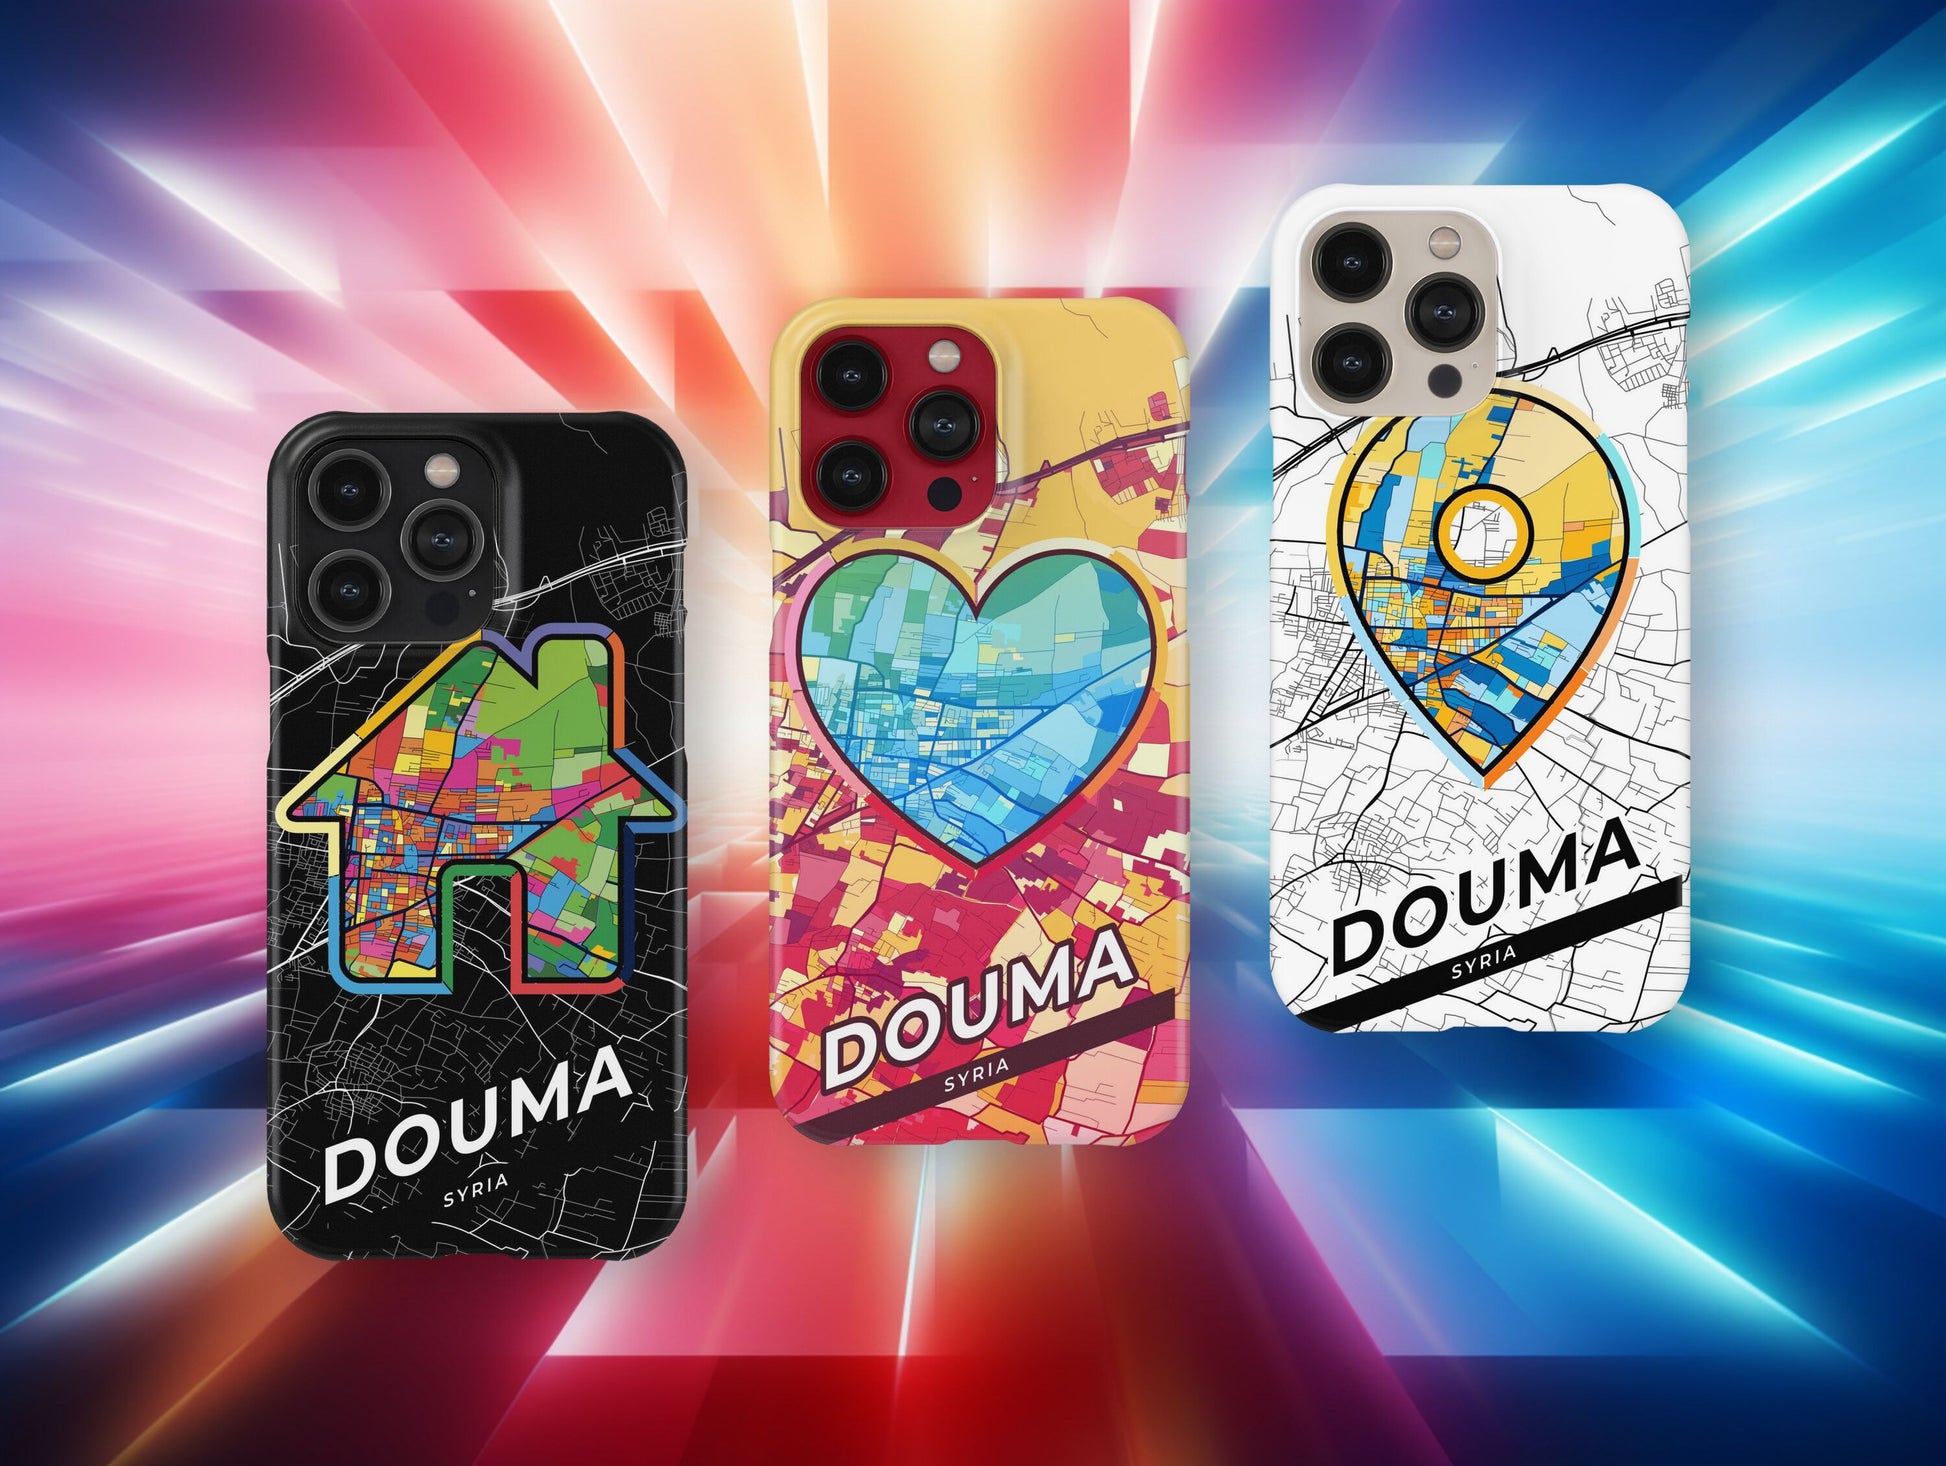 Douma Syria slim phone case with colorful icon. Birthday, wedding or housewarming gift. Couple match cases.